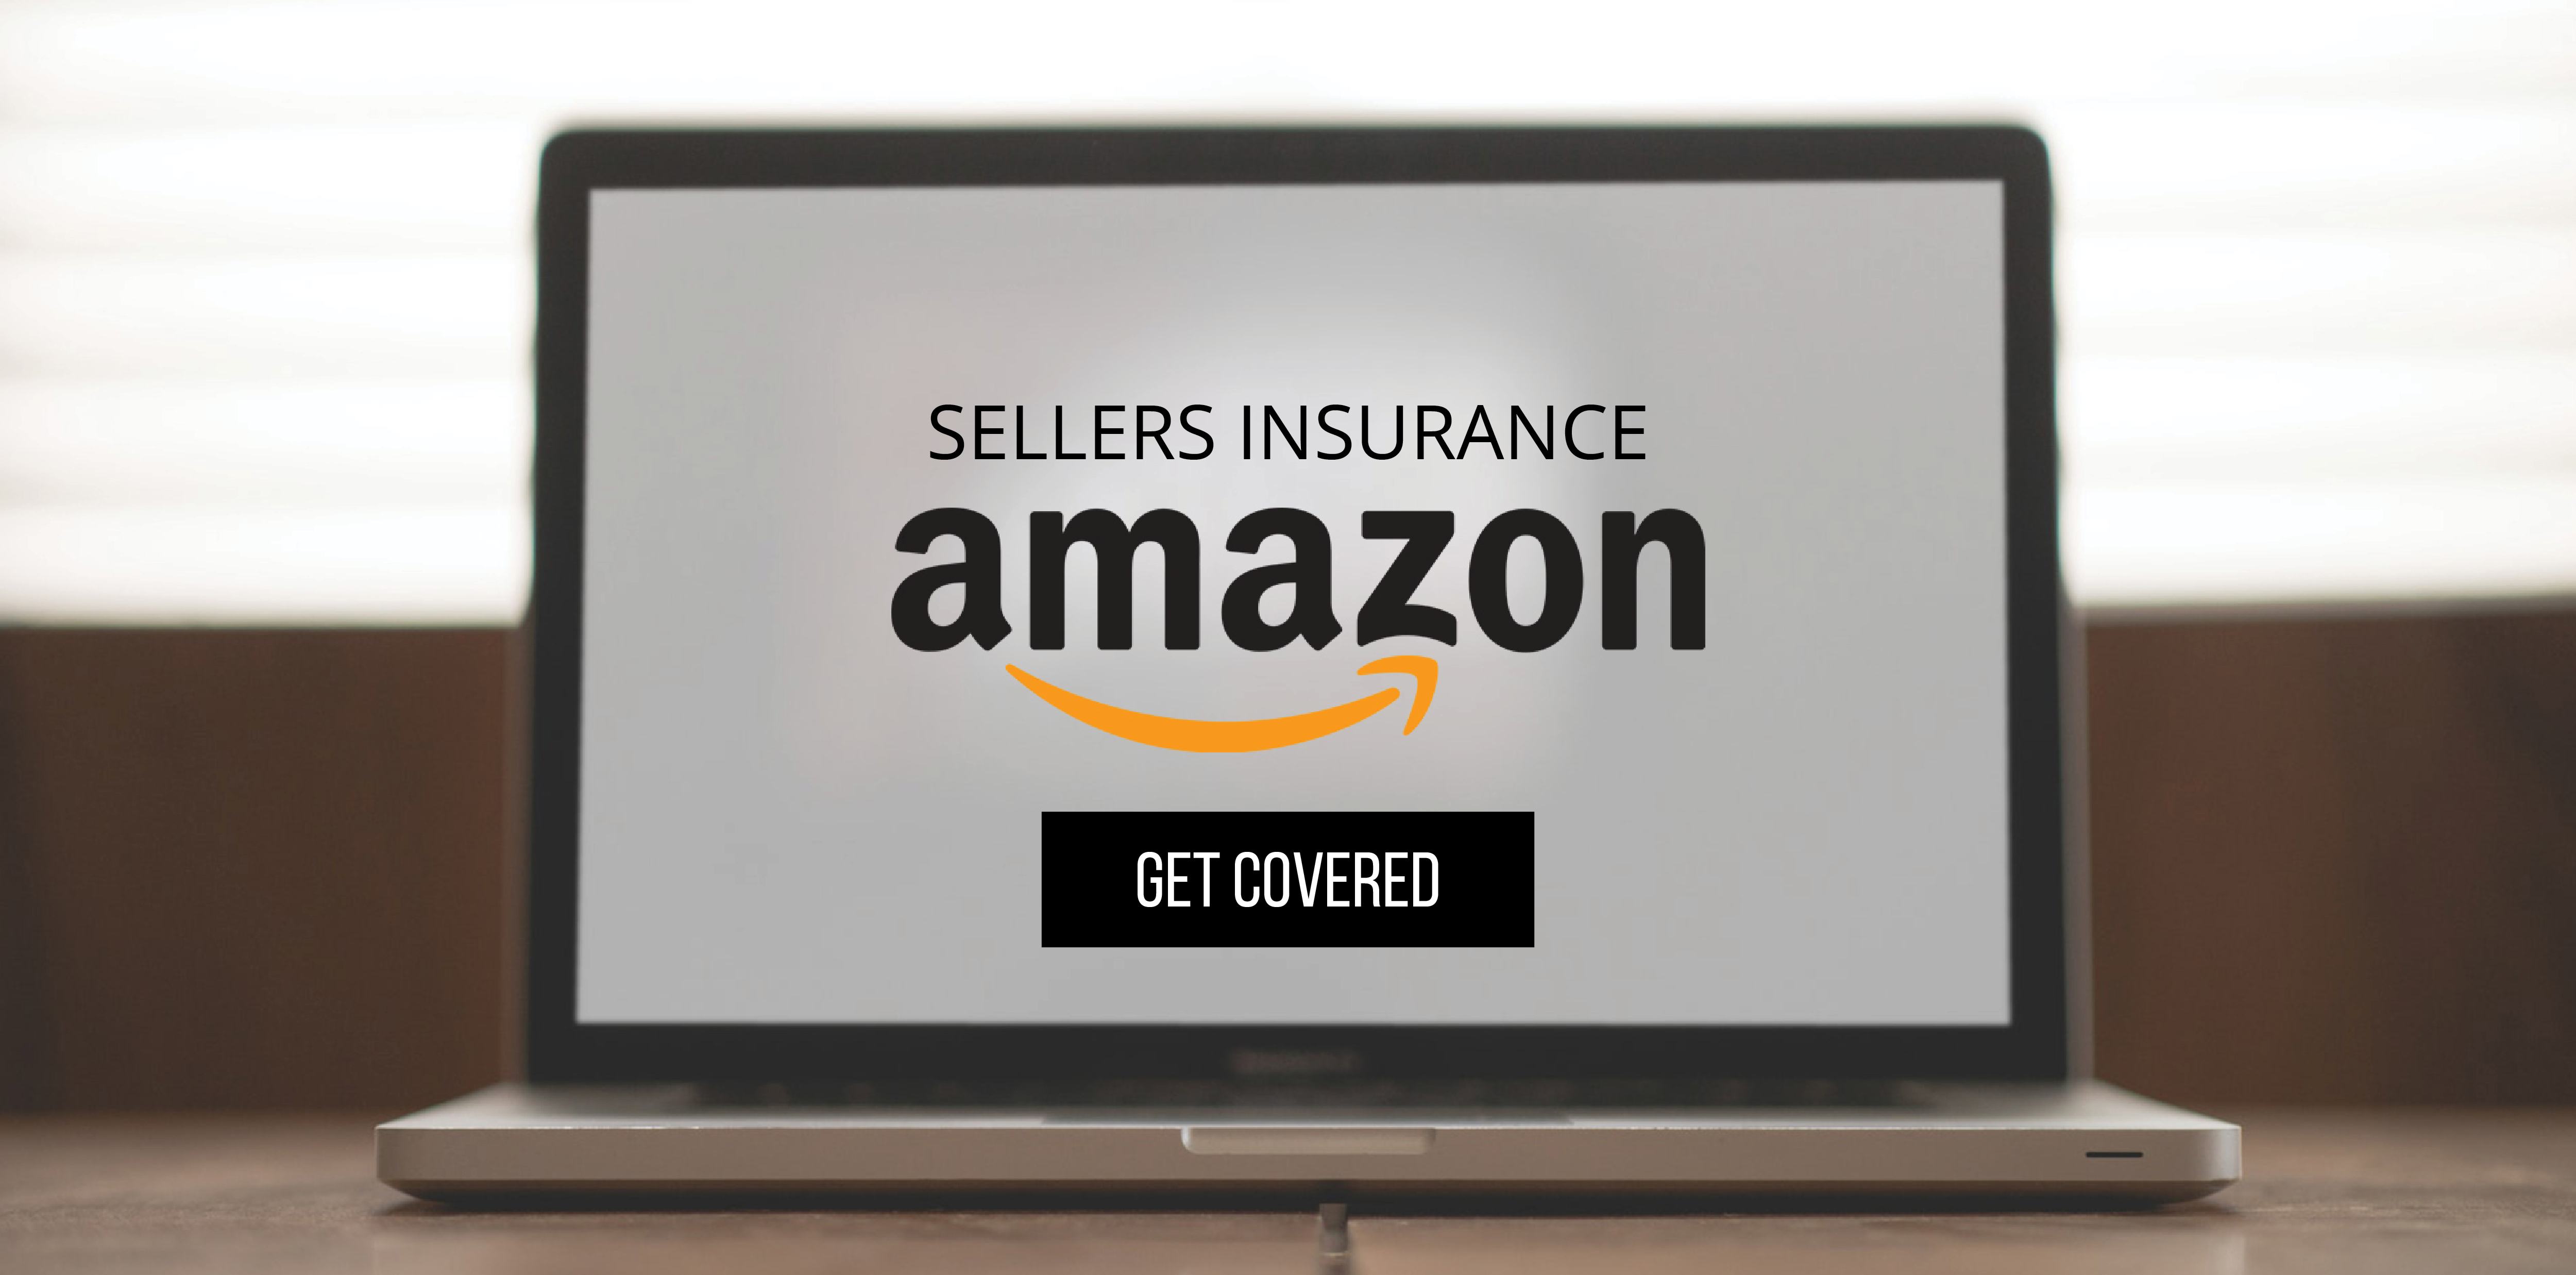 Amazon Sellers' Insurance